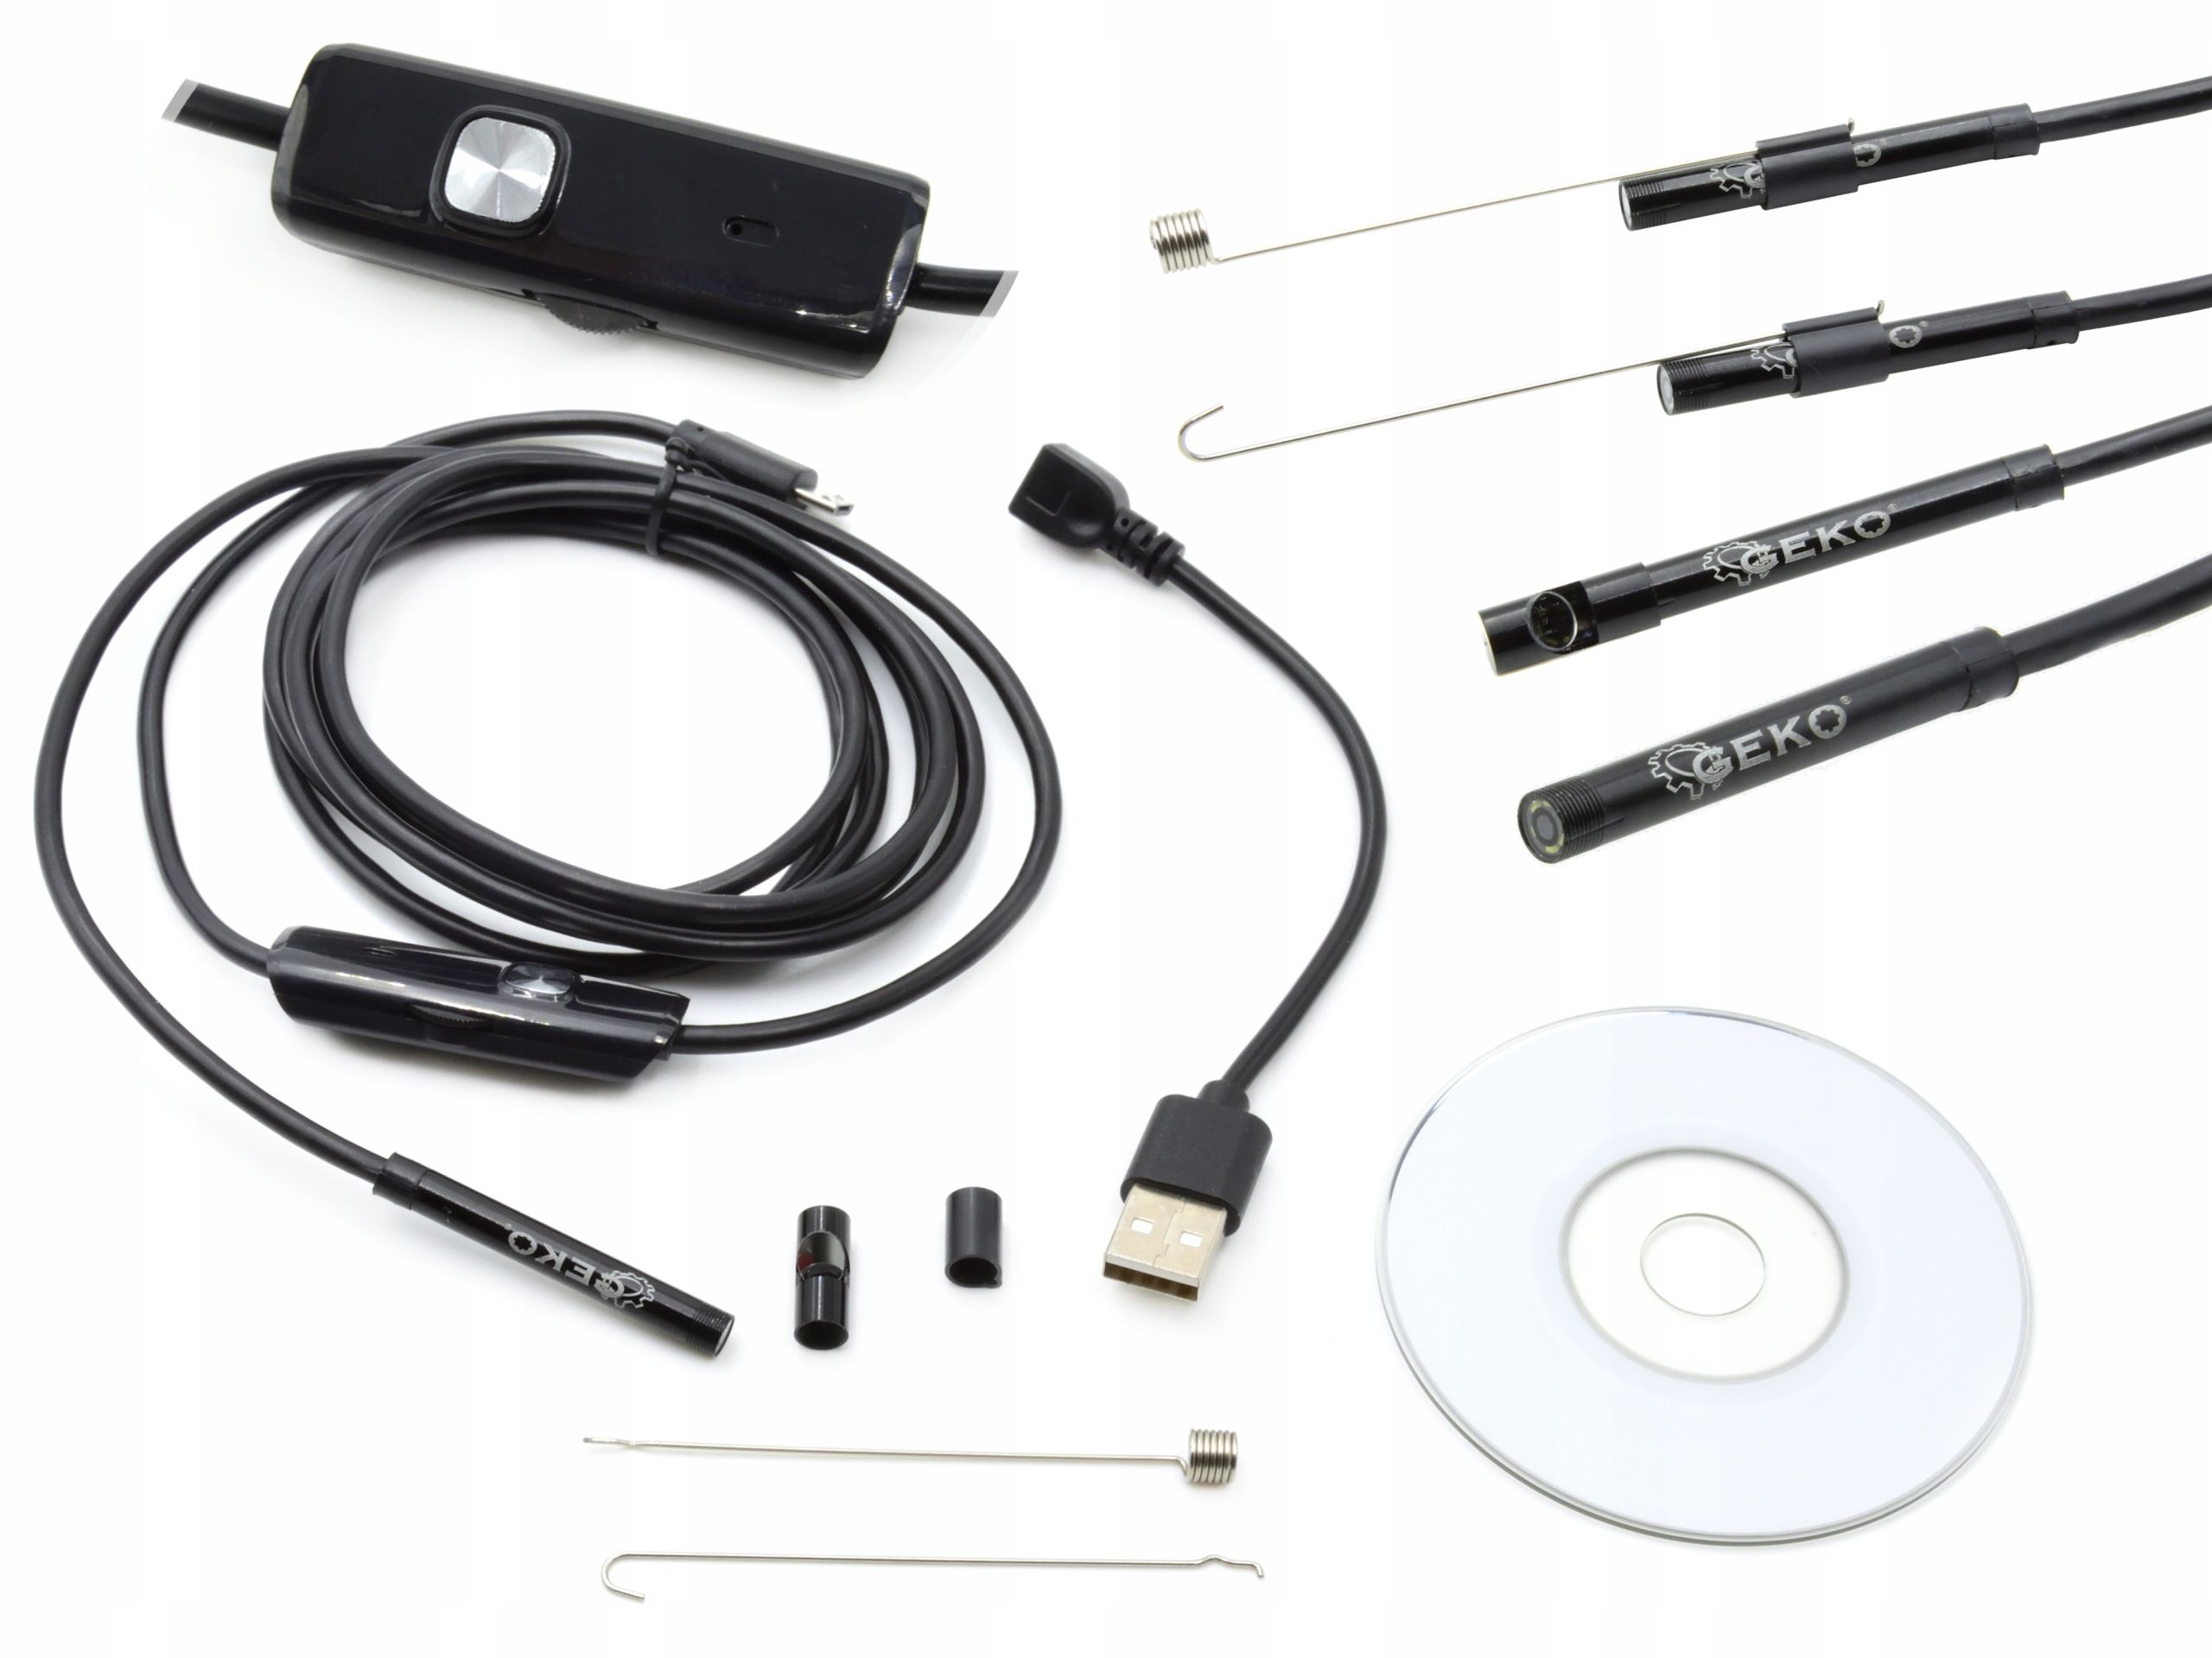 Endoskop kamera inspekcyjna android usb 5,5mm led (WAR549)